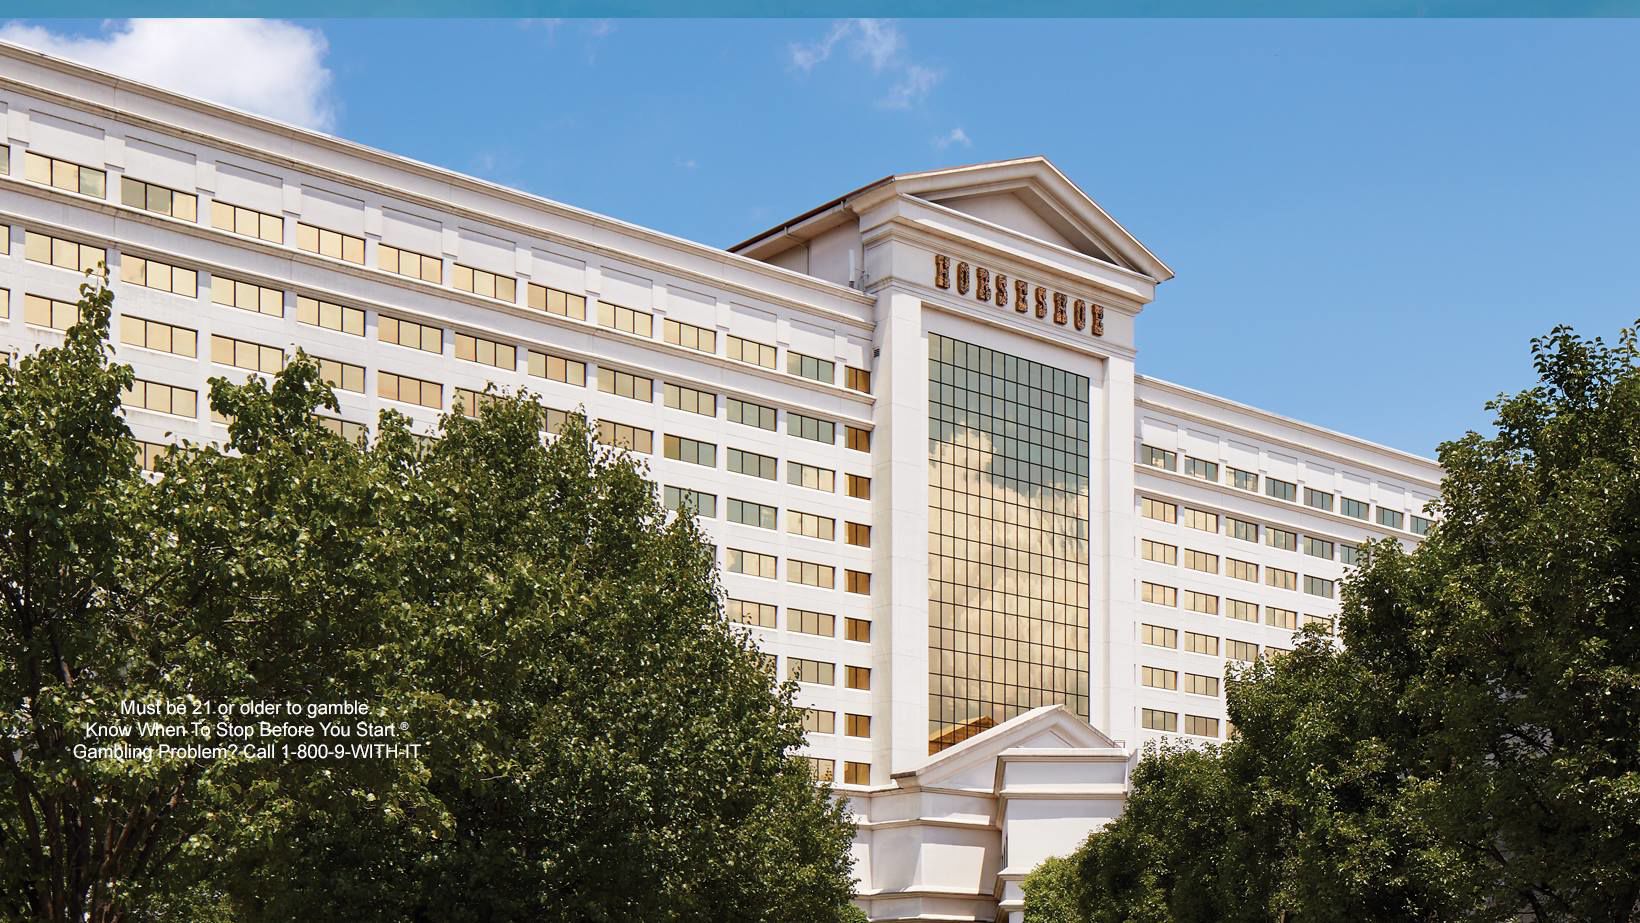 horseshoe casino indiana hotel discounts